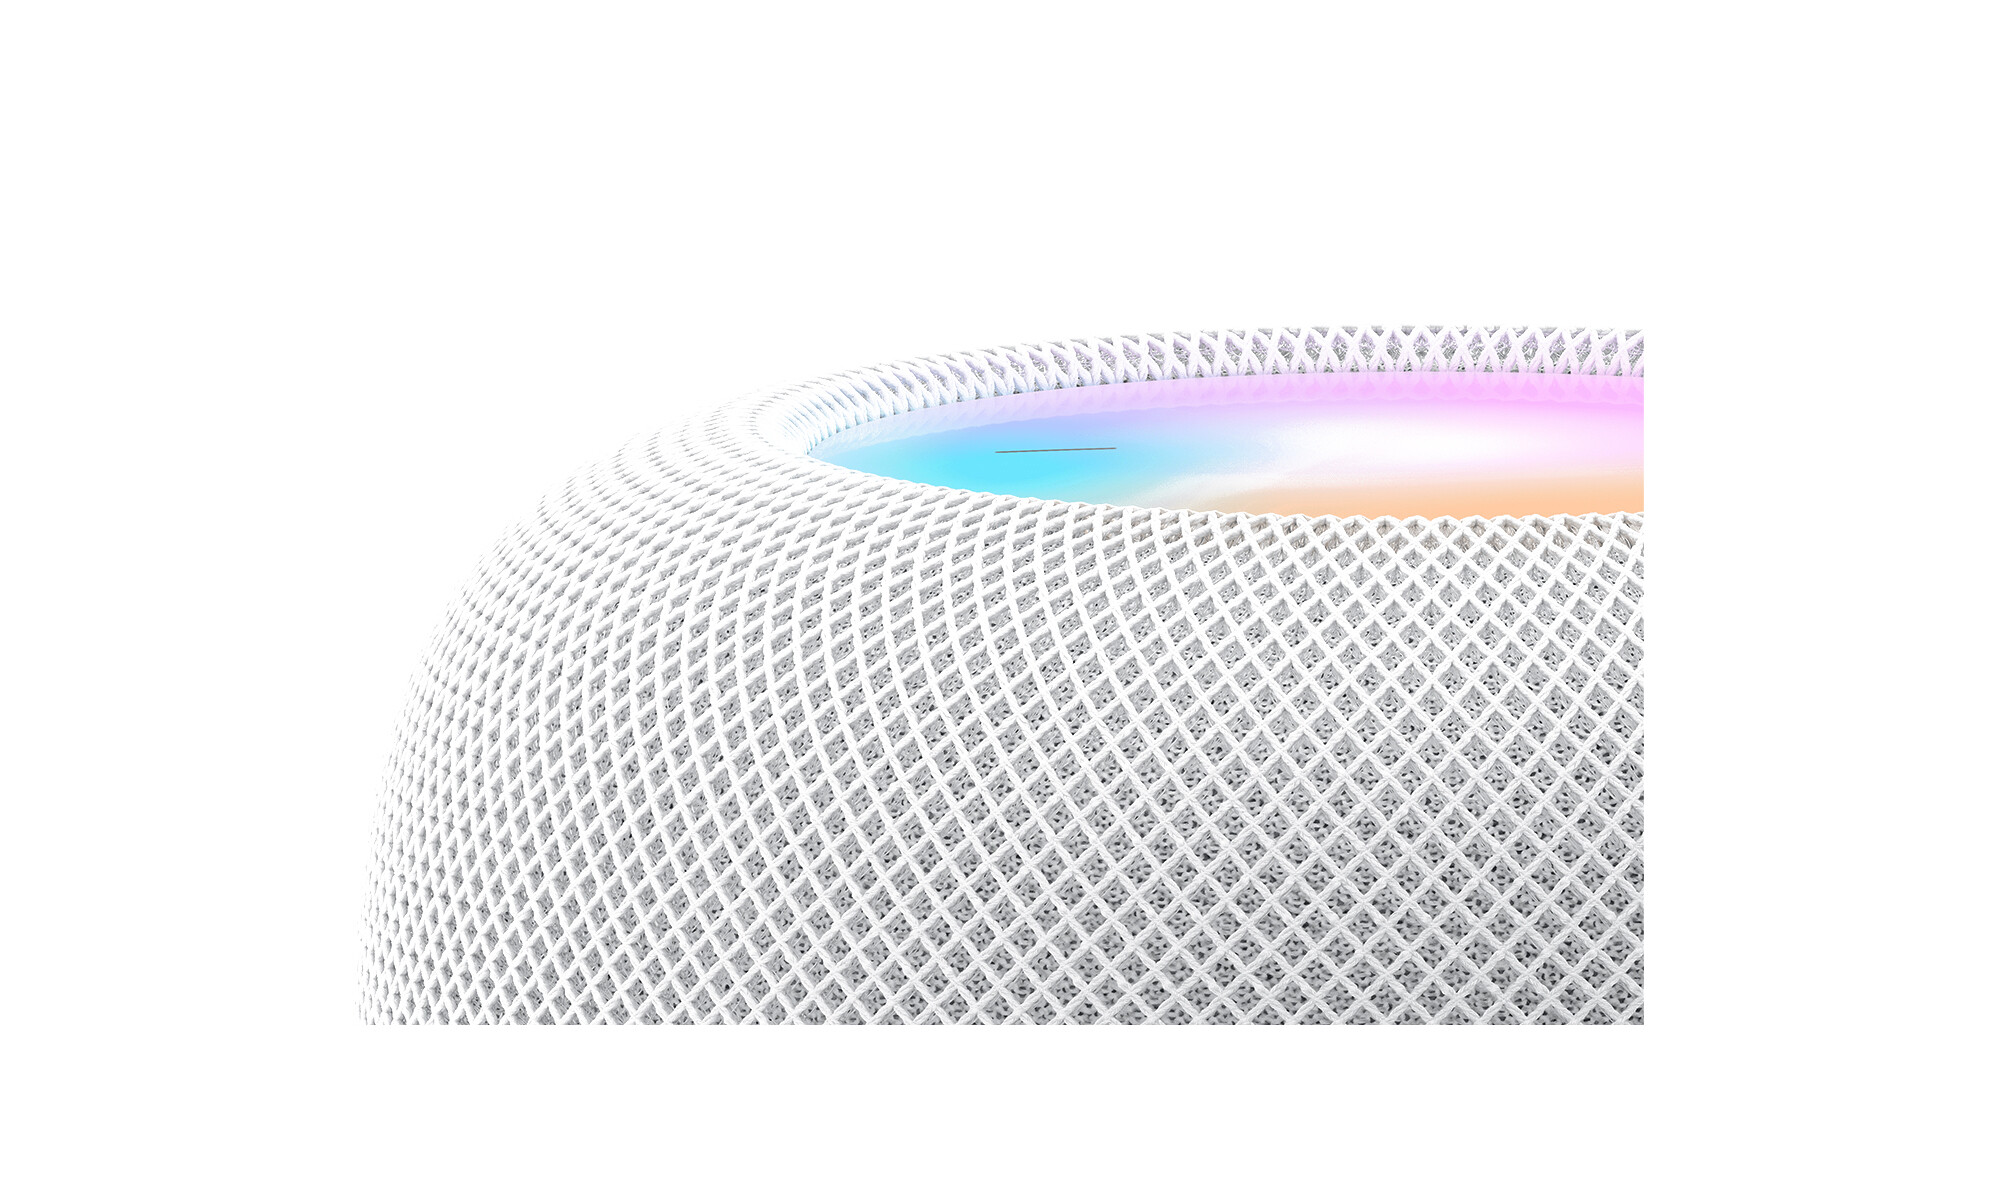 Apple-HomePod-Weiss-2-Generation-2023